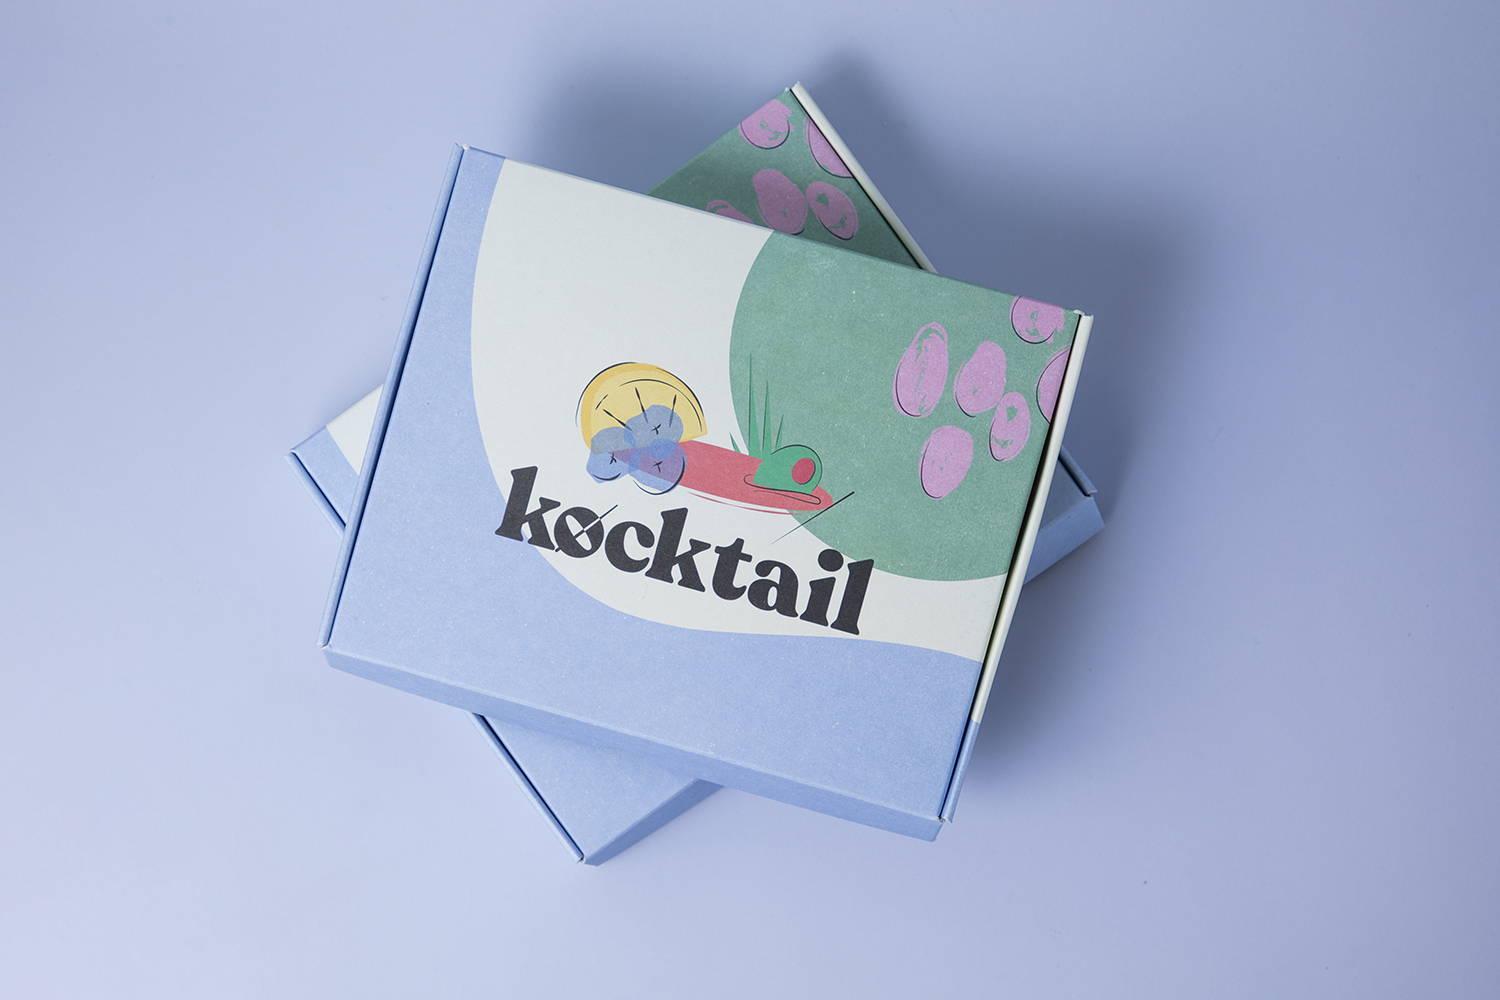 Kocktail single gift box on blue background